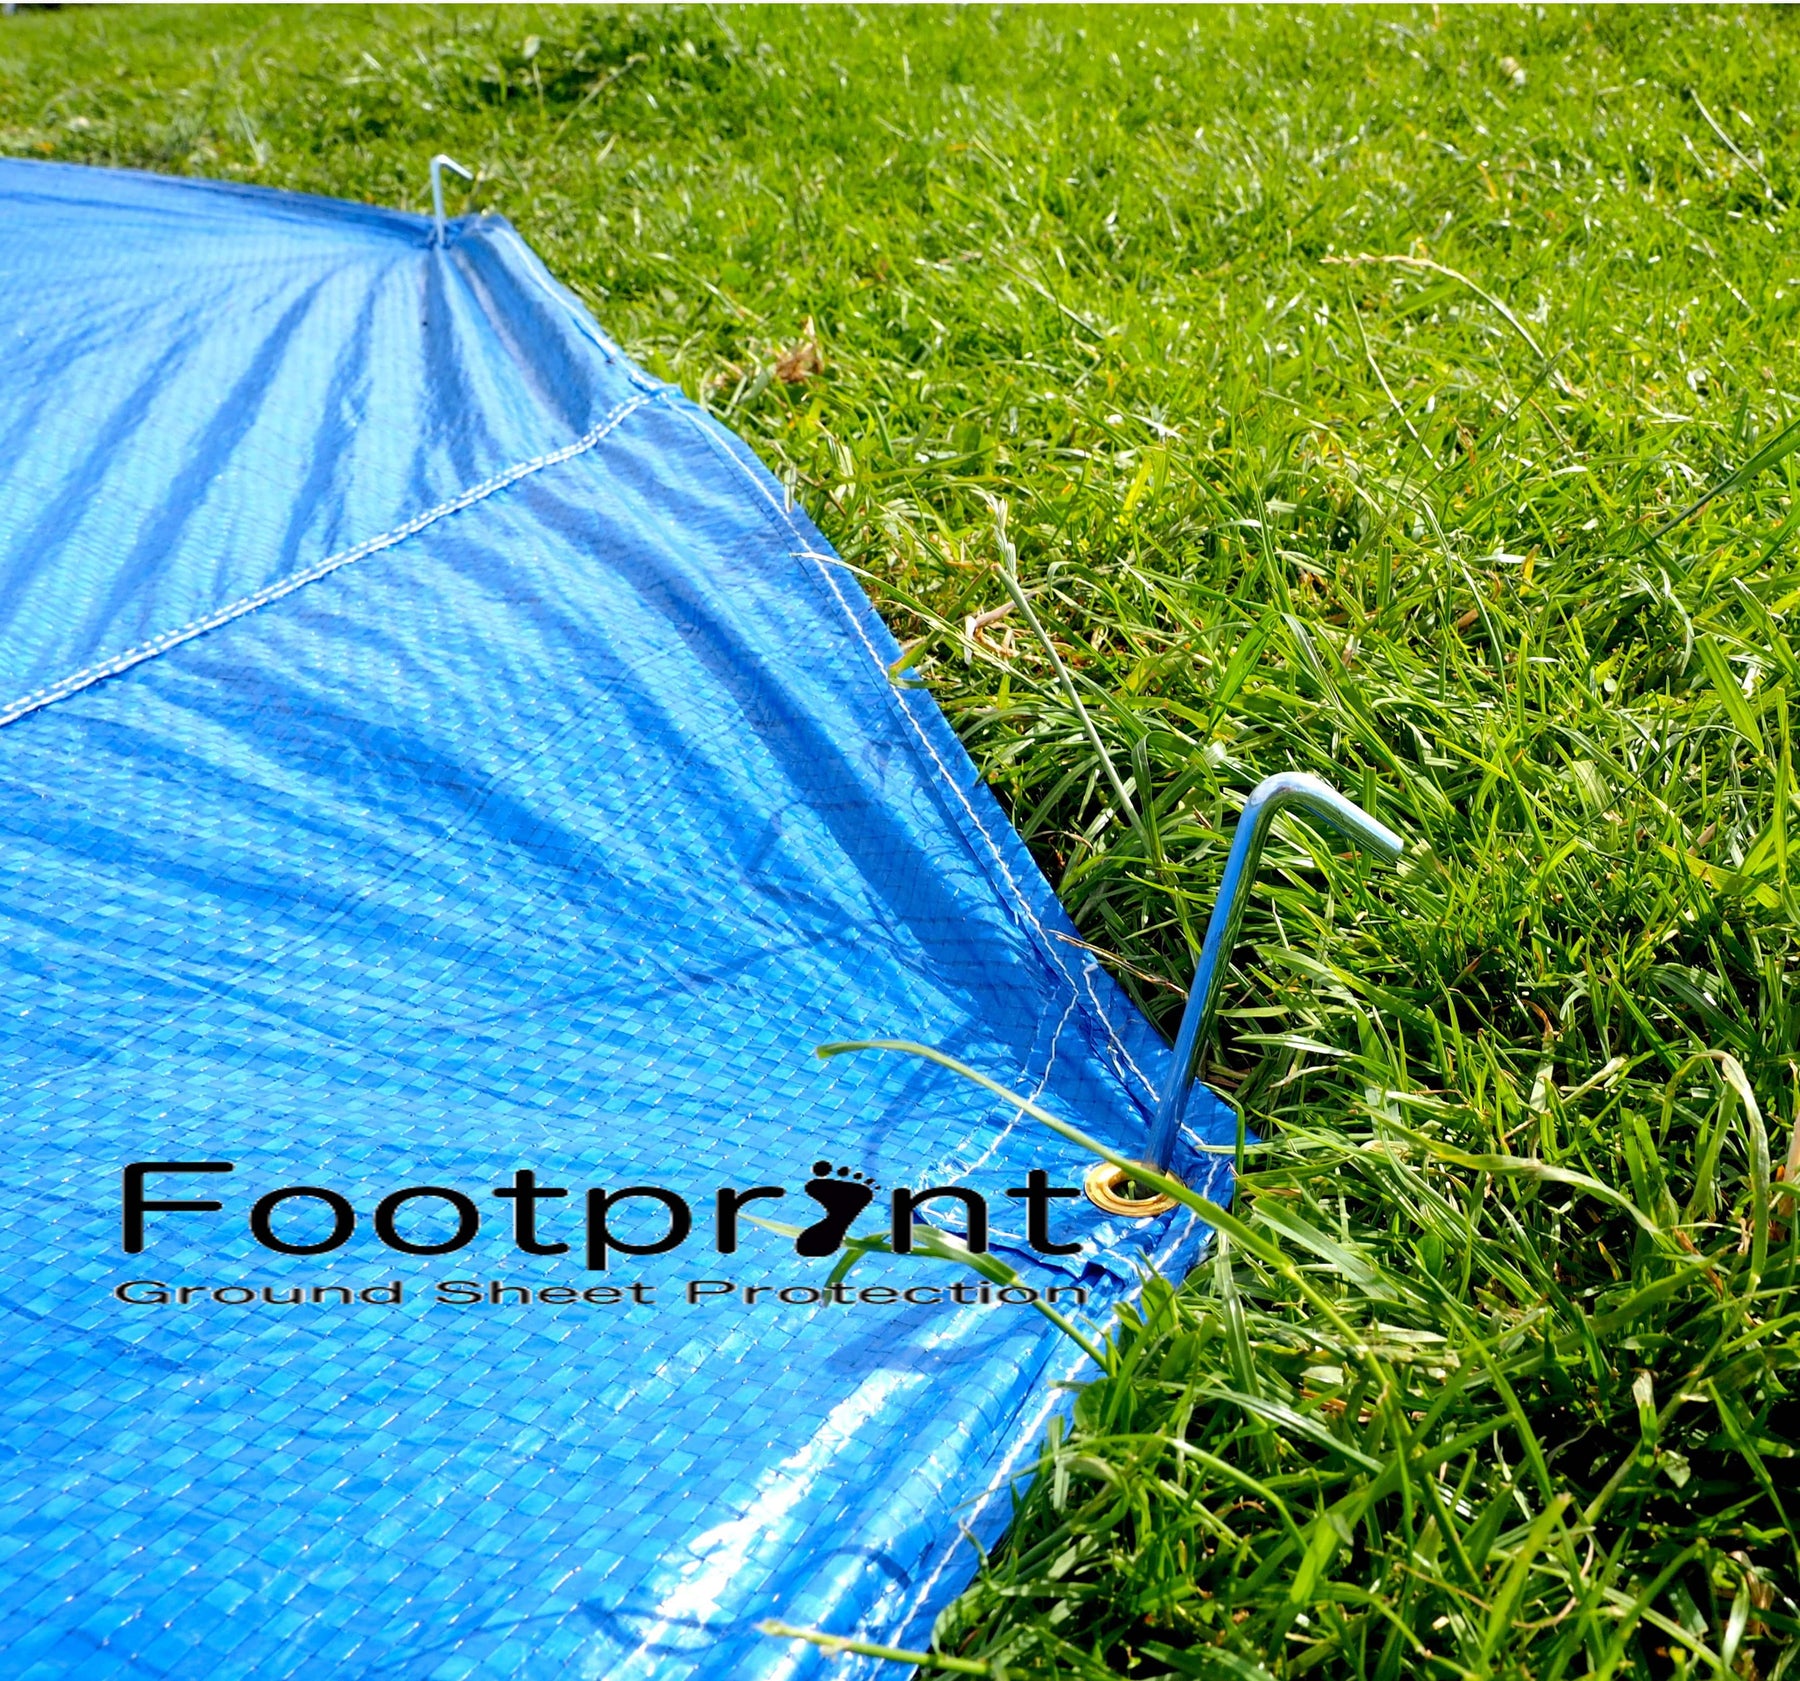 The Footprint - Bell Tent Groundsheet Protector